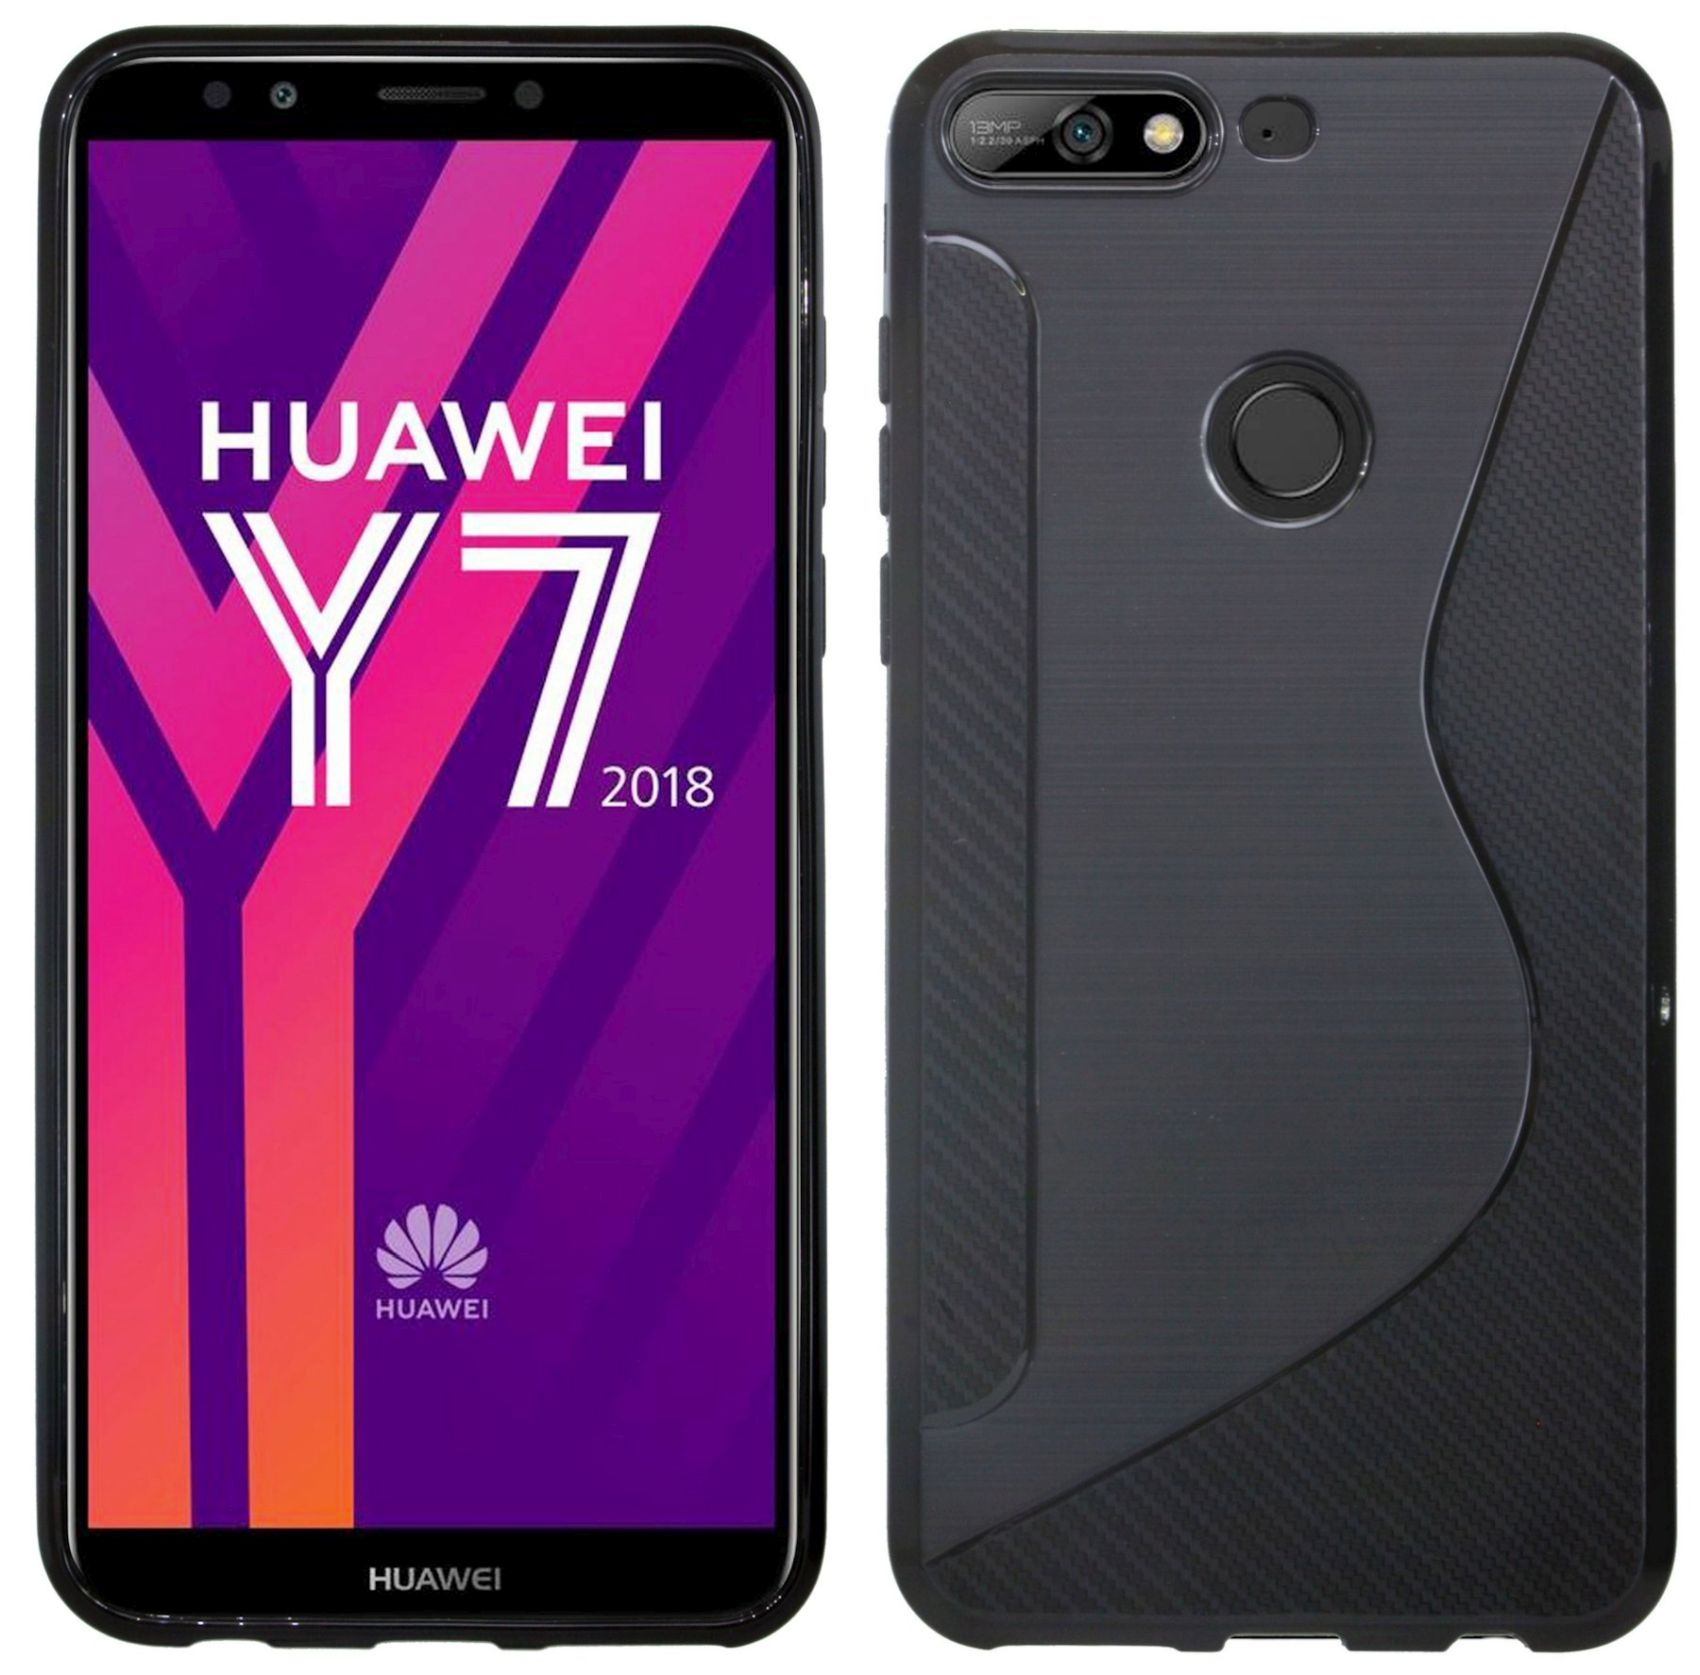 Huawei, Schwarz S-Line Cover, 2018, COFI Bumper, Y7